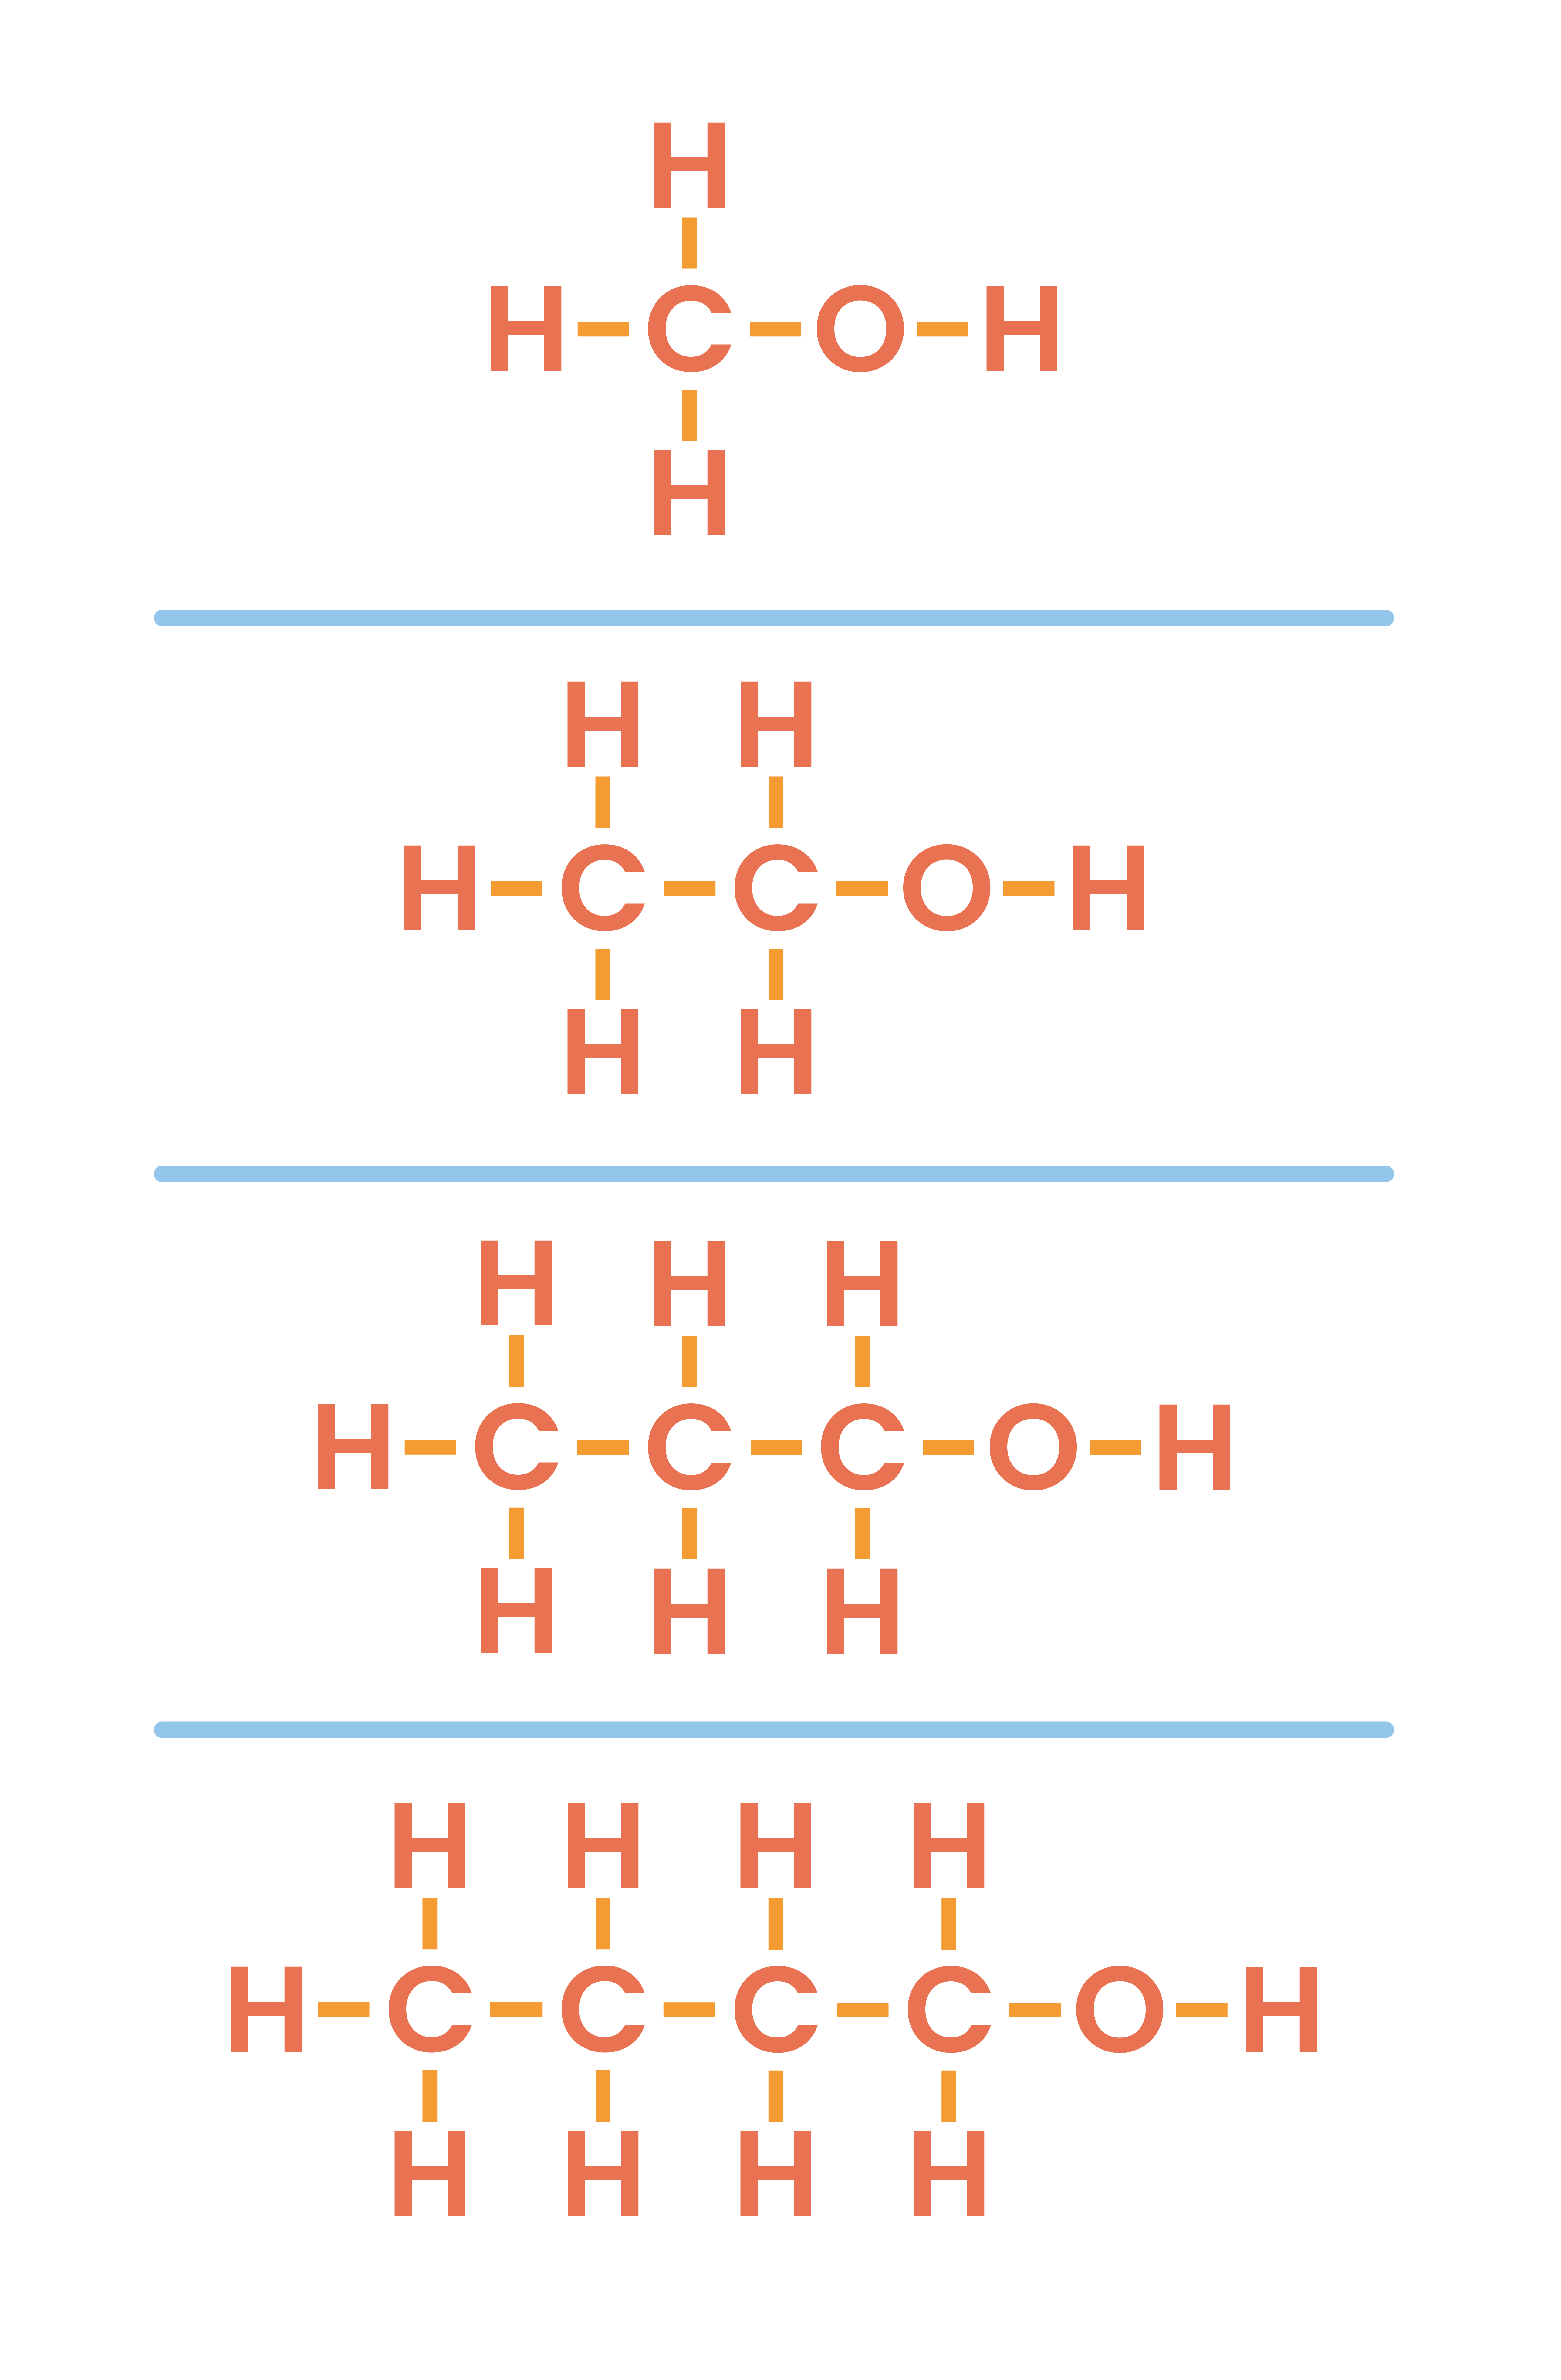 edexcel_igcse_chemistry_topic 25_alcohols_001_alcohols diagram